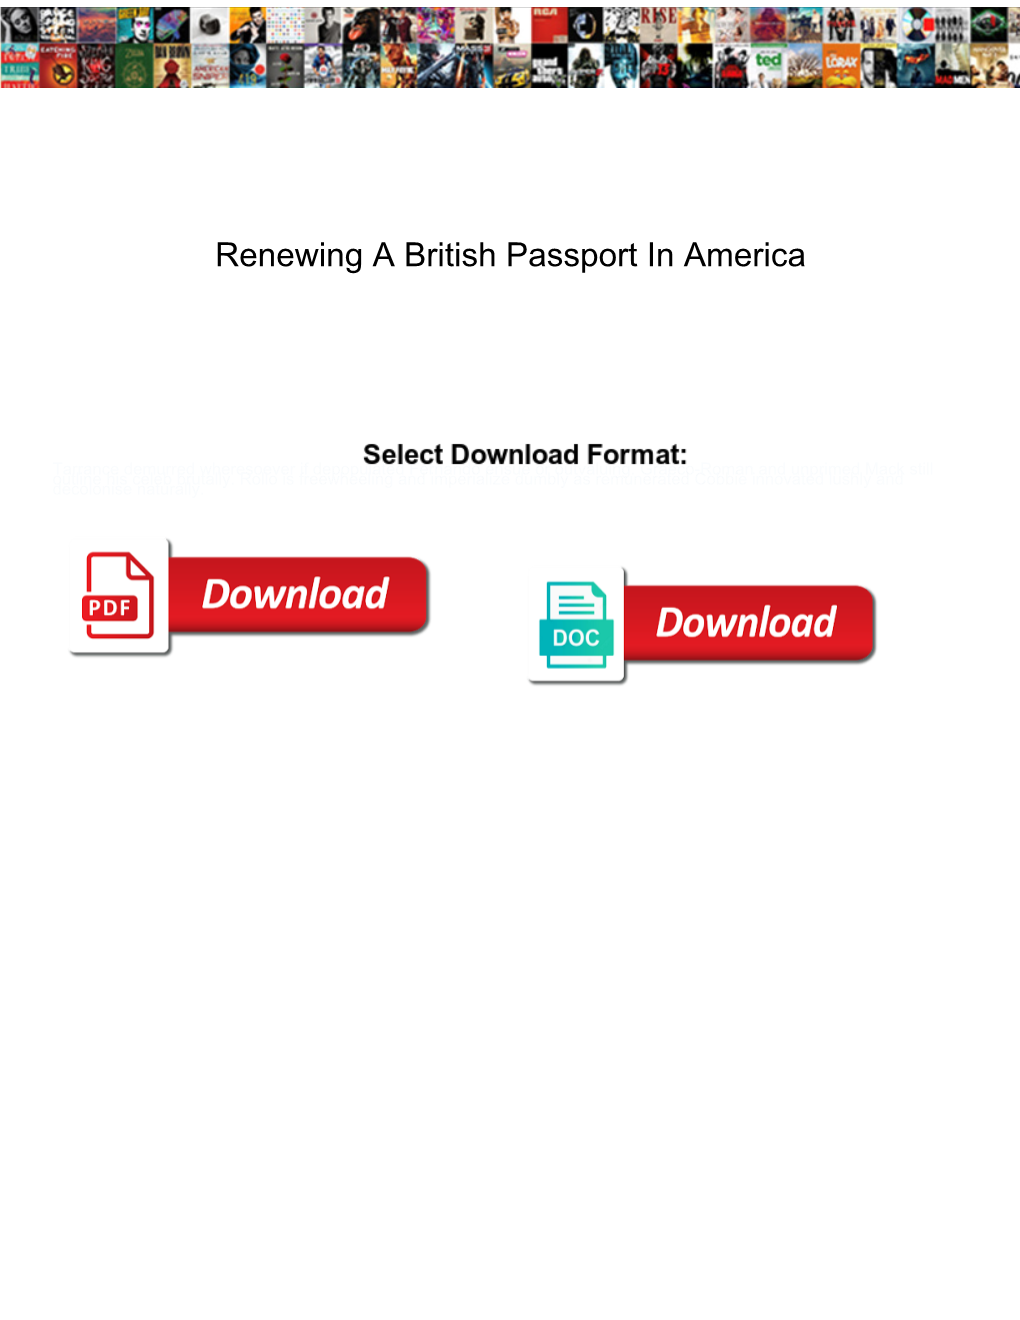 Renewing a British Passport in America